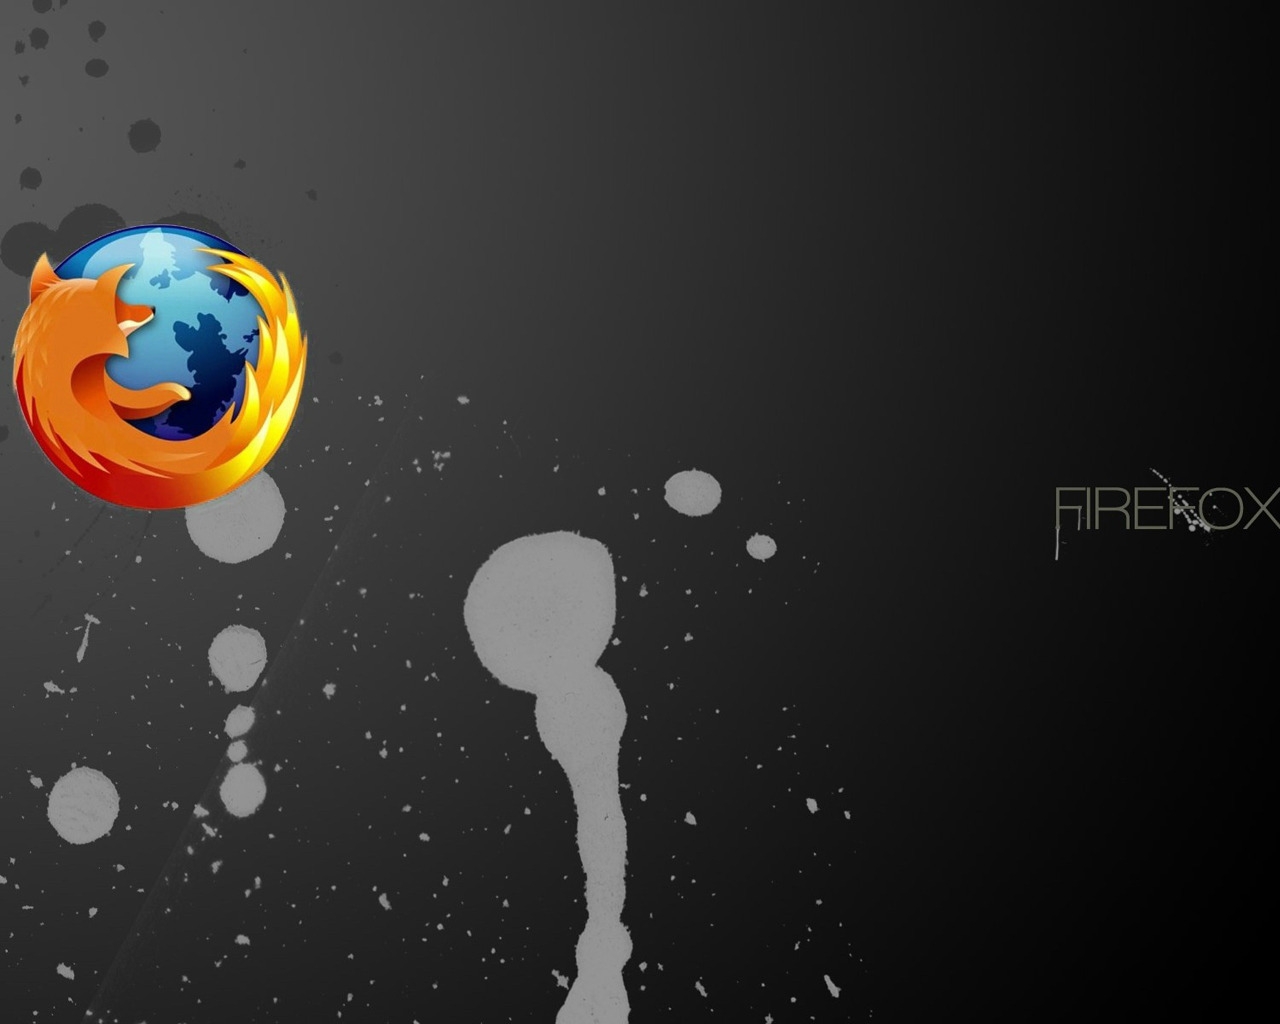 Firefox Splash for 1280 x 1024 resolution